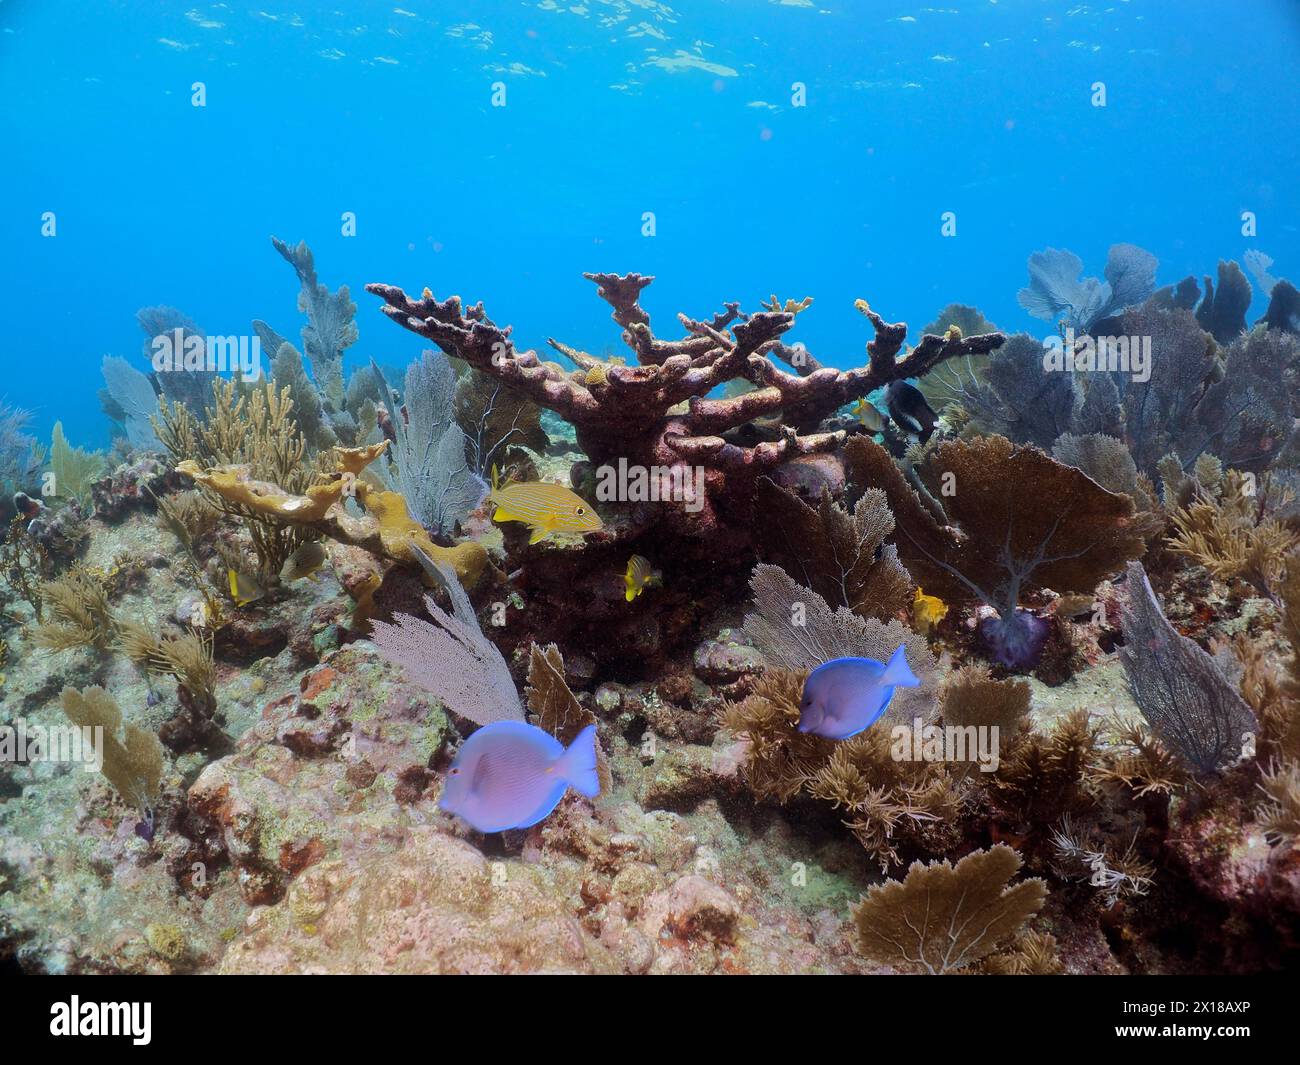 Dead elkhorn coral (Acropora palmata) in a typical Caribbean reef landscape. Dive site John Pennekamp Coral Reef State Park, Key Largo, Florida Keys Stock Photo